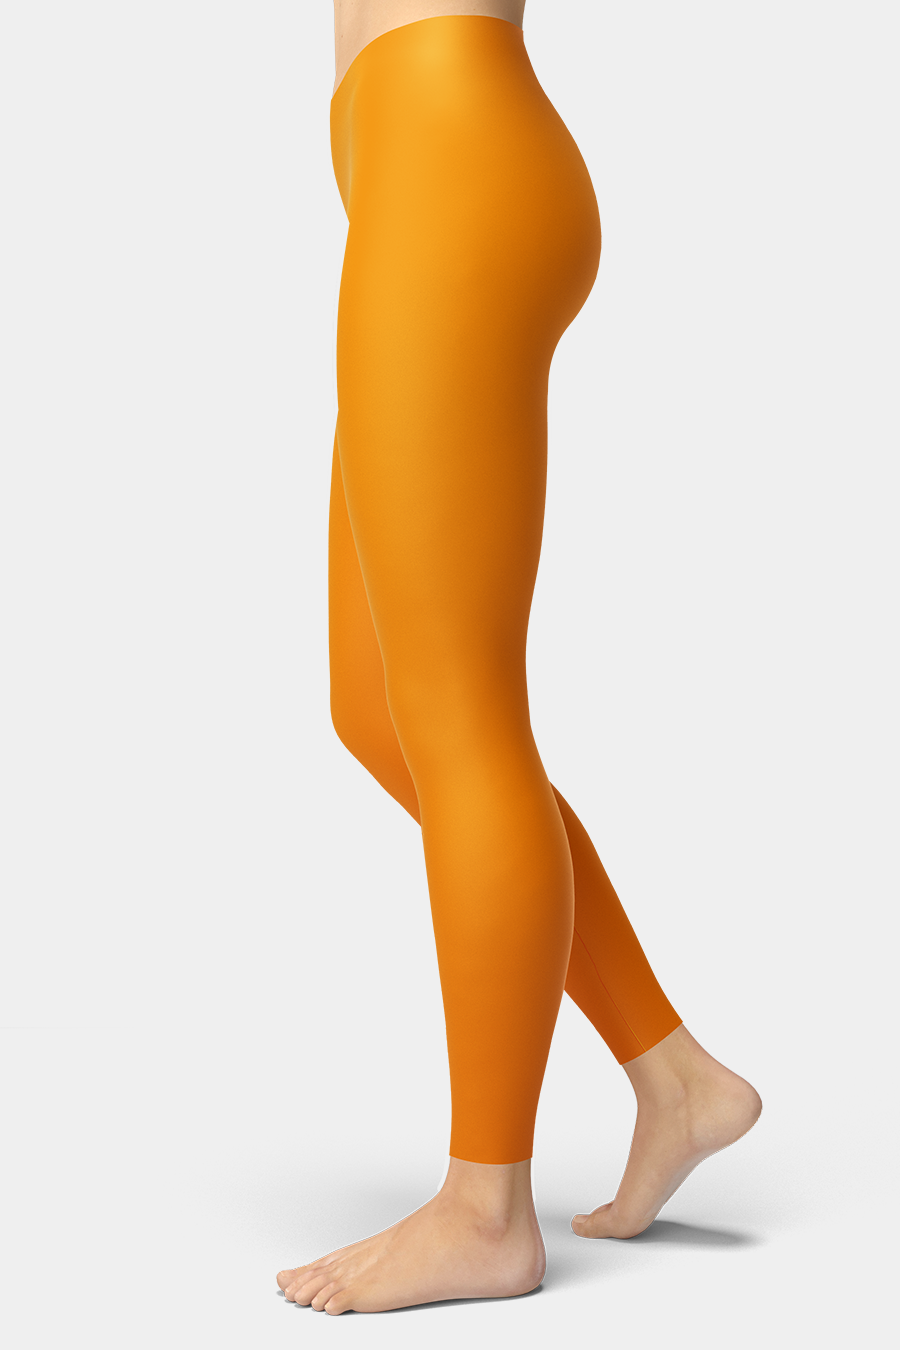 Tangerine Orange Leggings - SeeMyLeggings